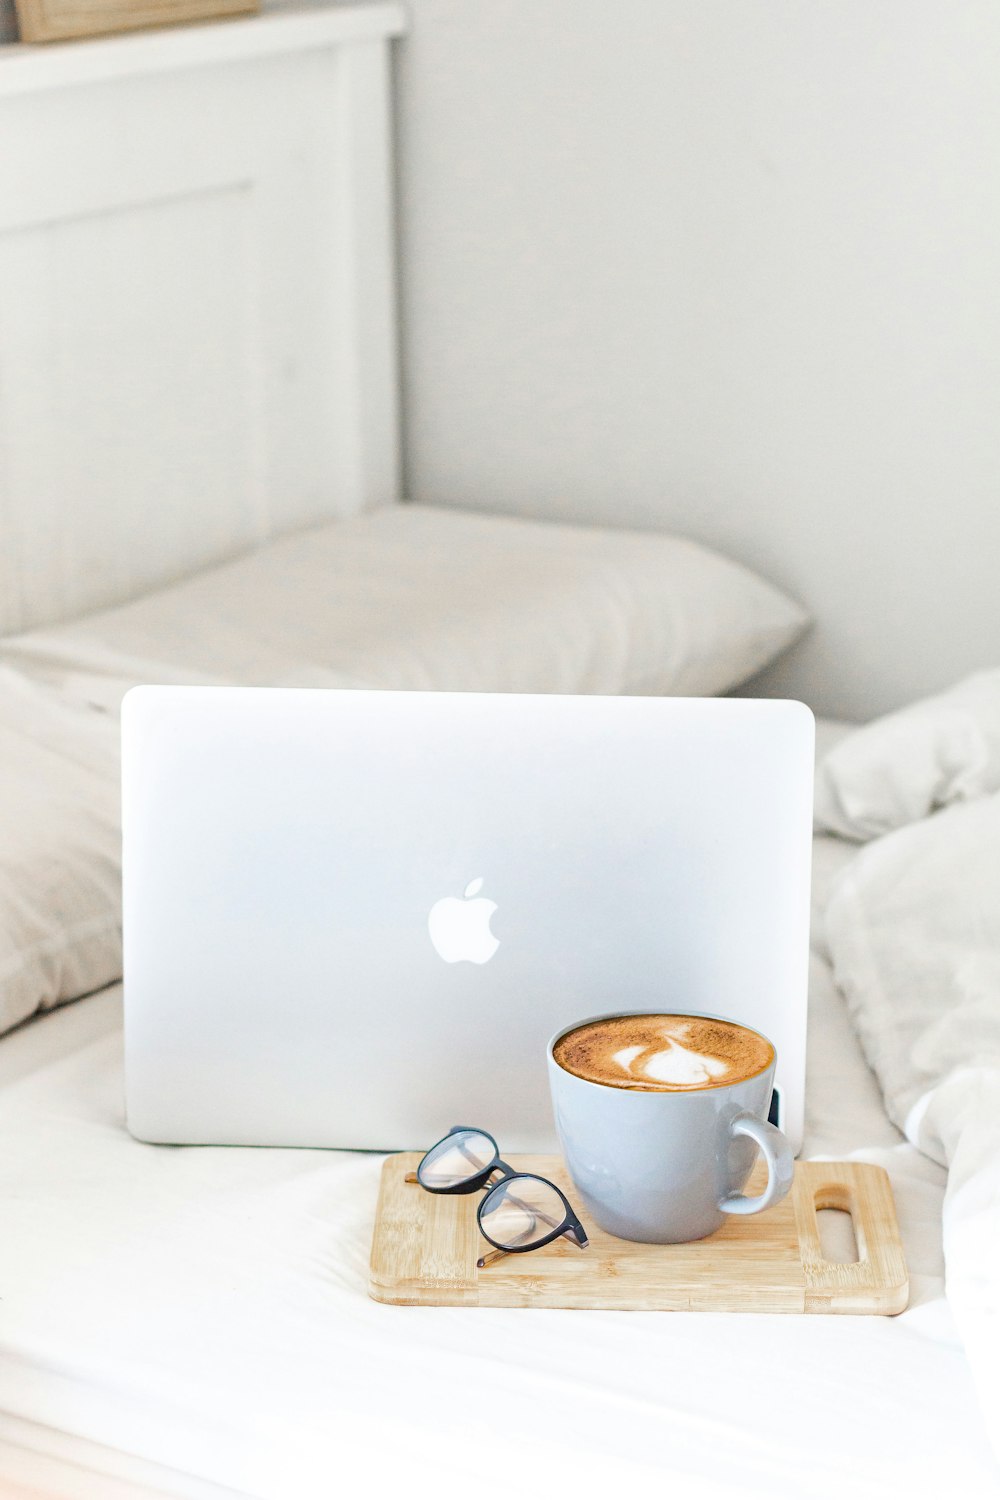 macbook air beside white ceramic mug on white bed